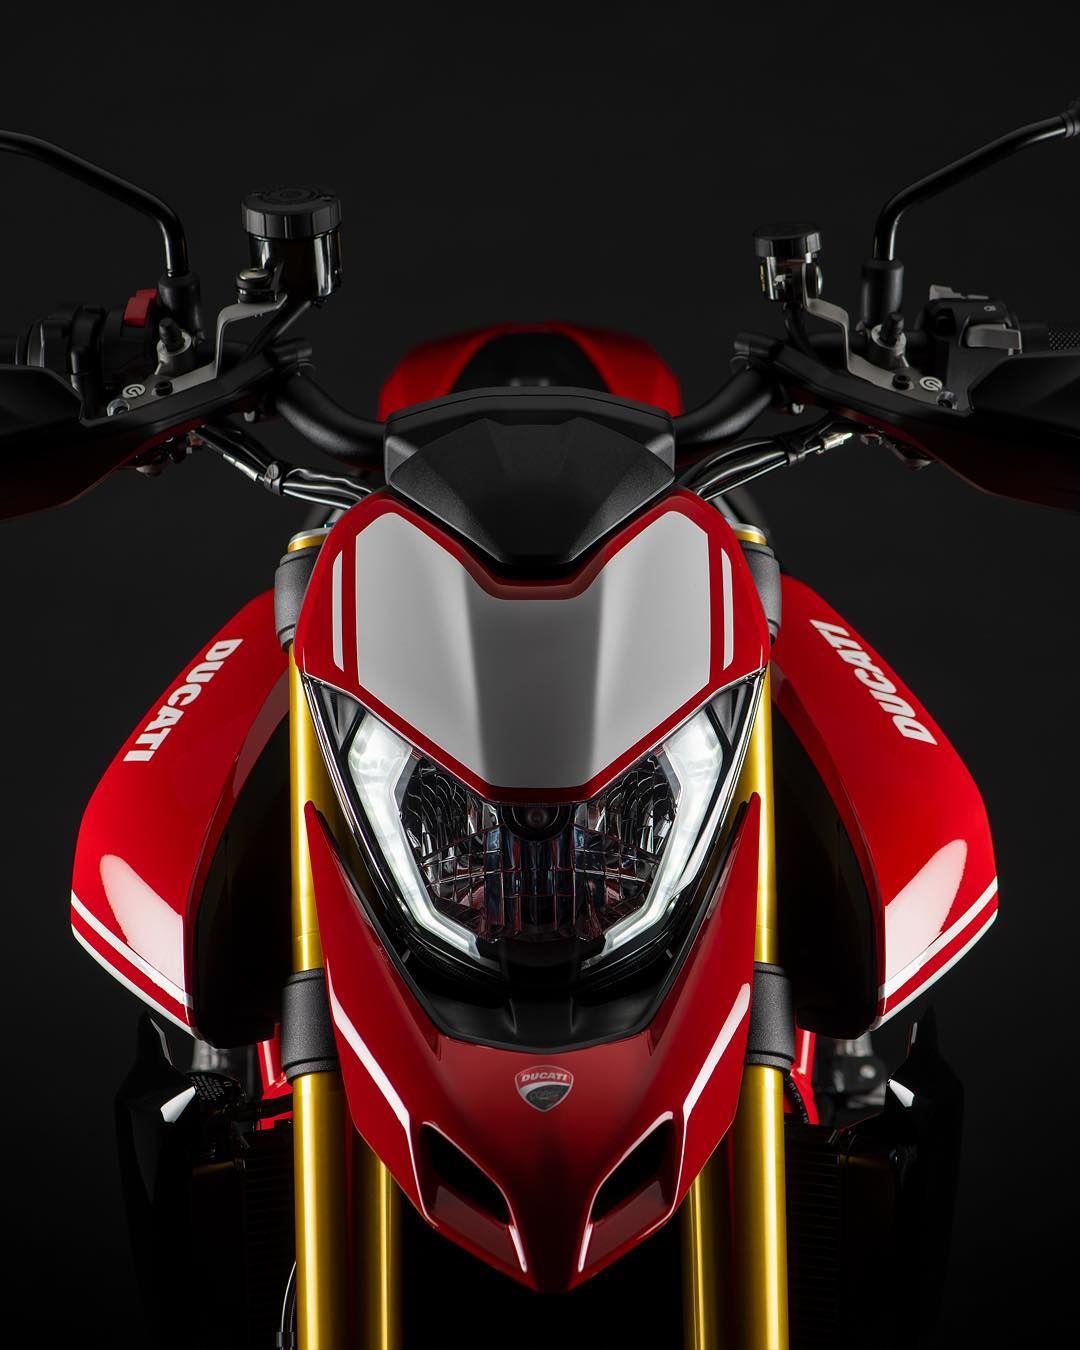 Ducati Hypermotard Wallpapers